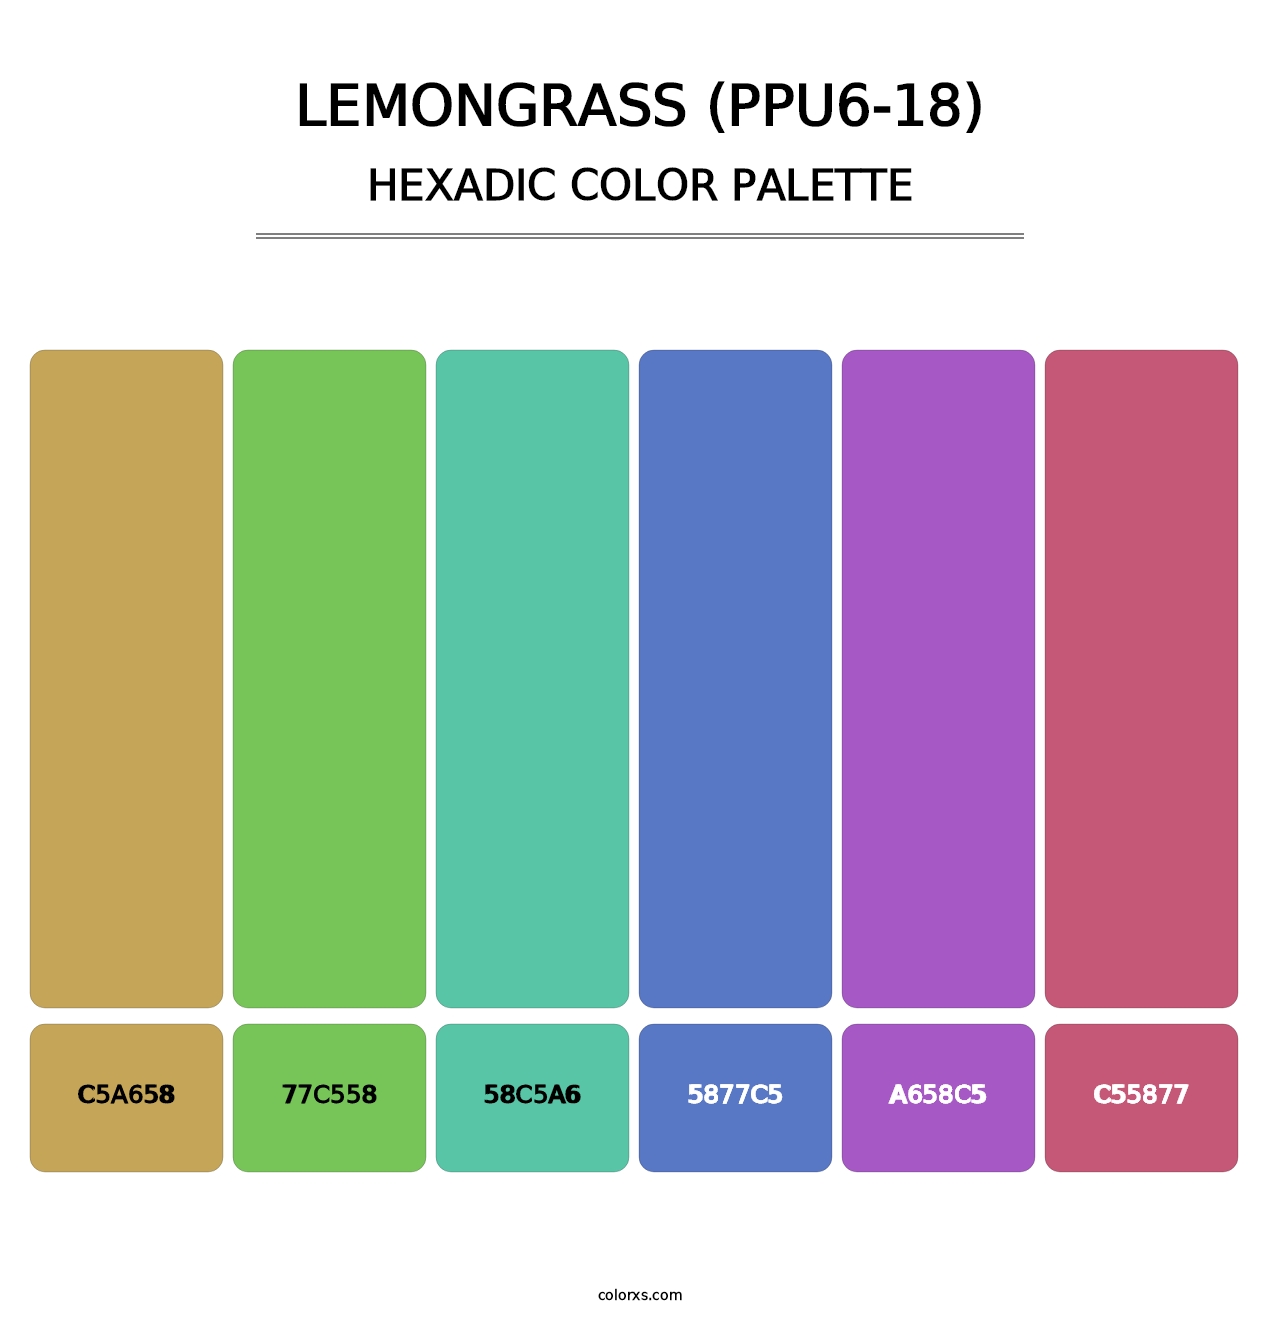 Lemongrass (PPU6-18) - Hexadic Color Palette